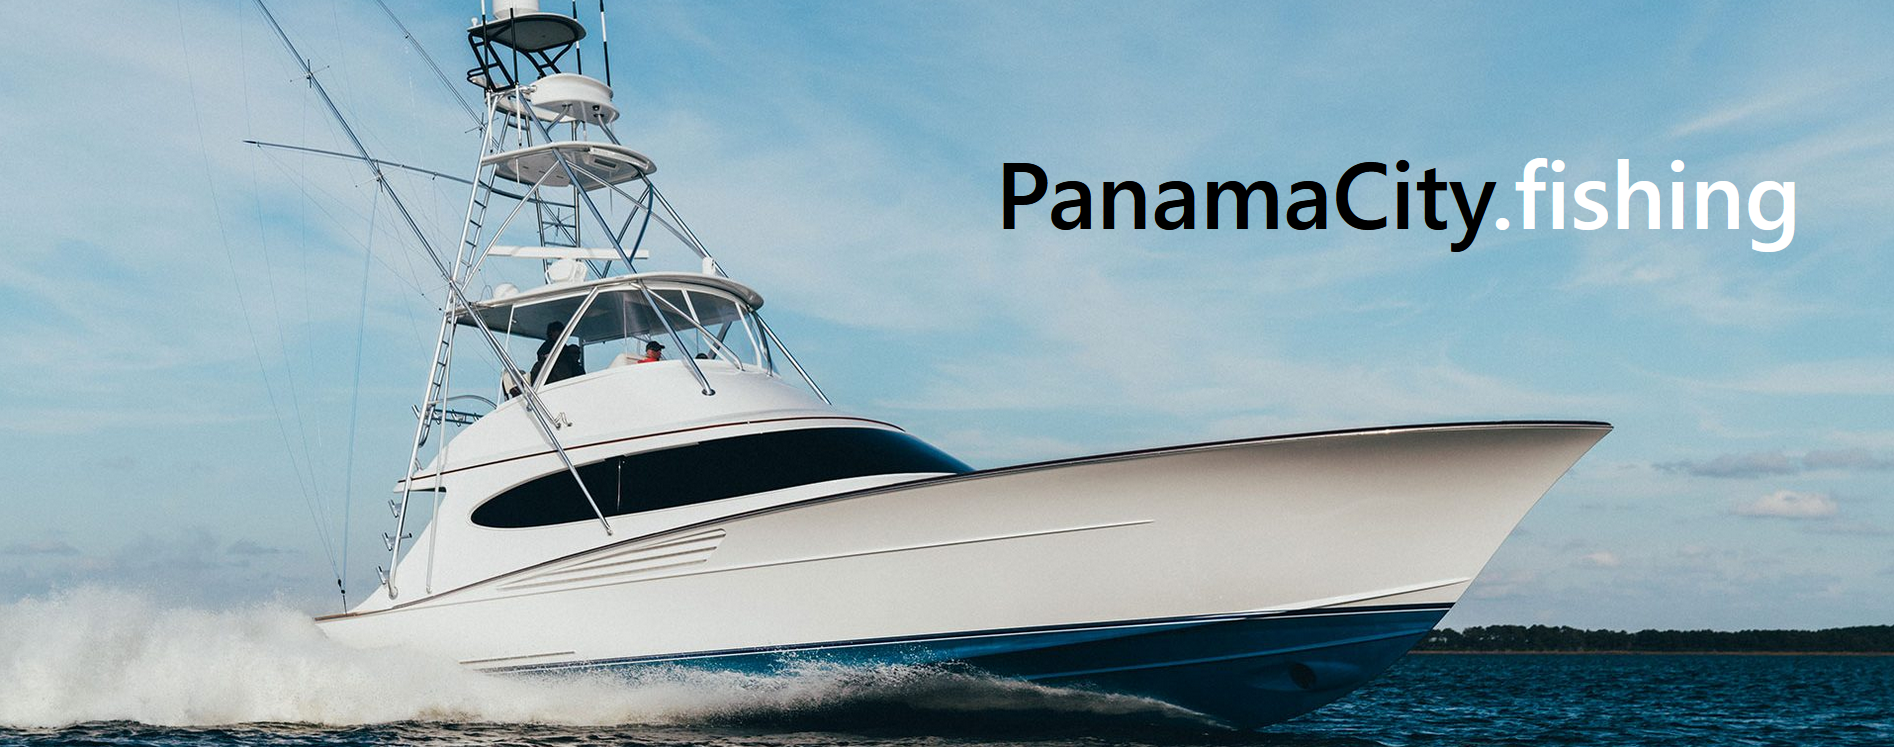 Panama City Fishing Charter hero image